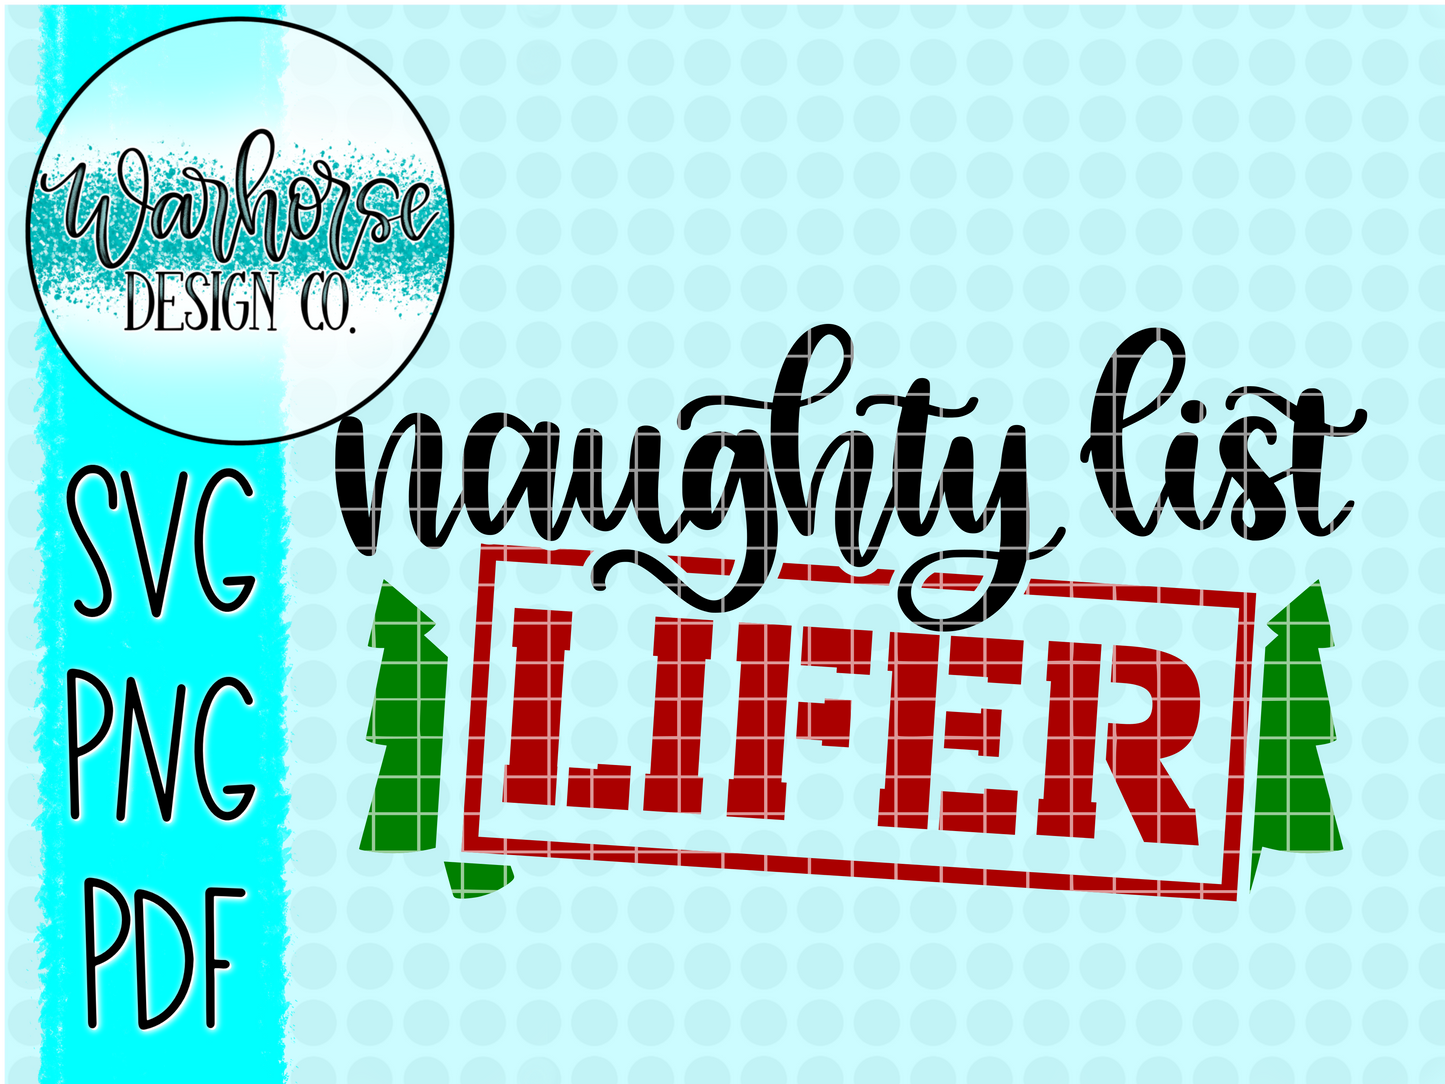 Naughty list lifer SVG PNG PDF